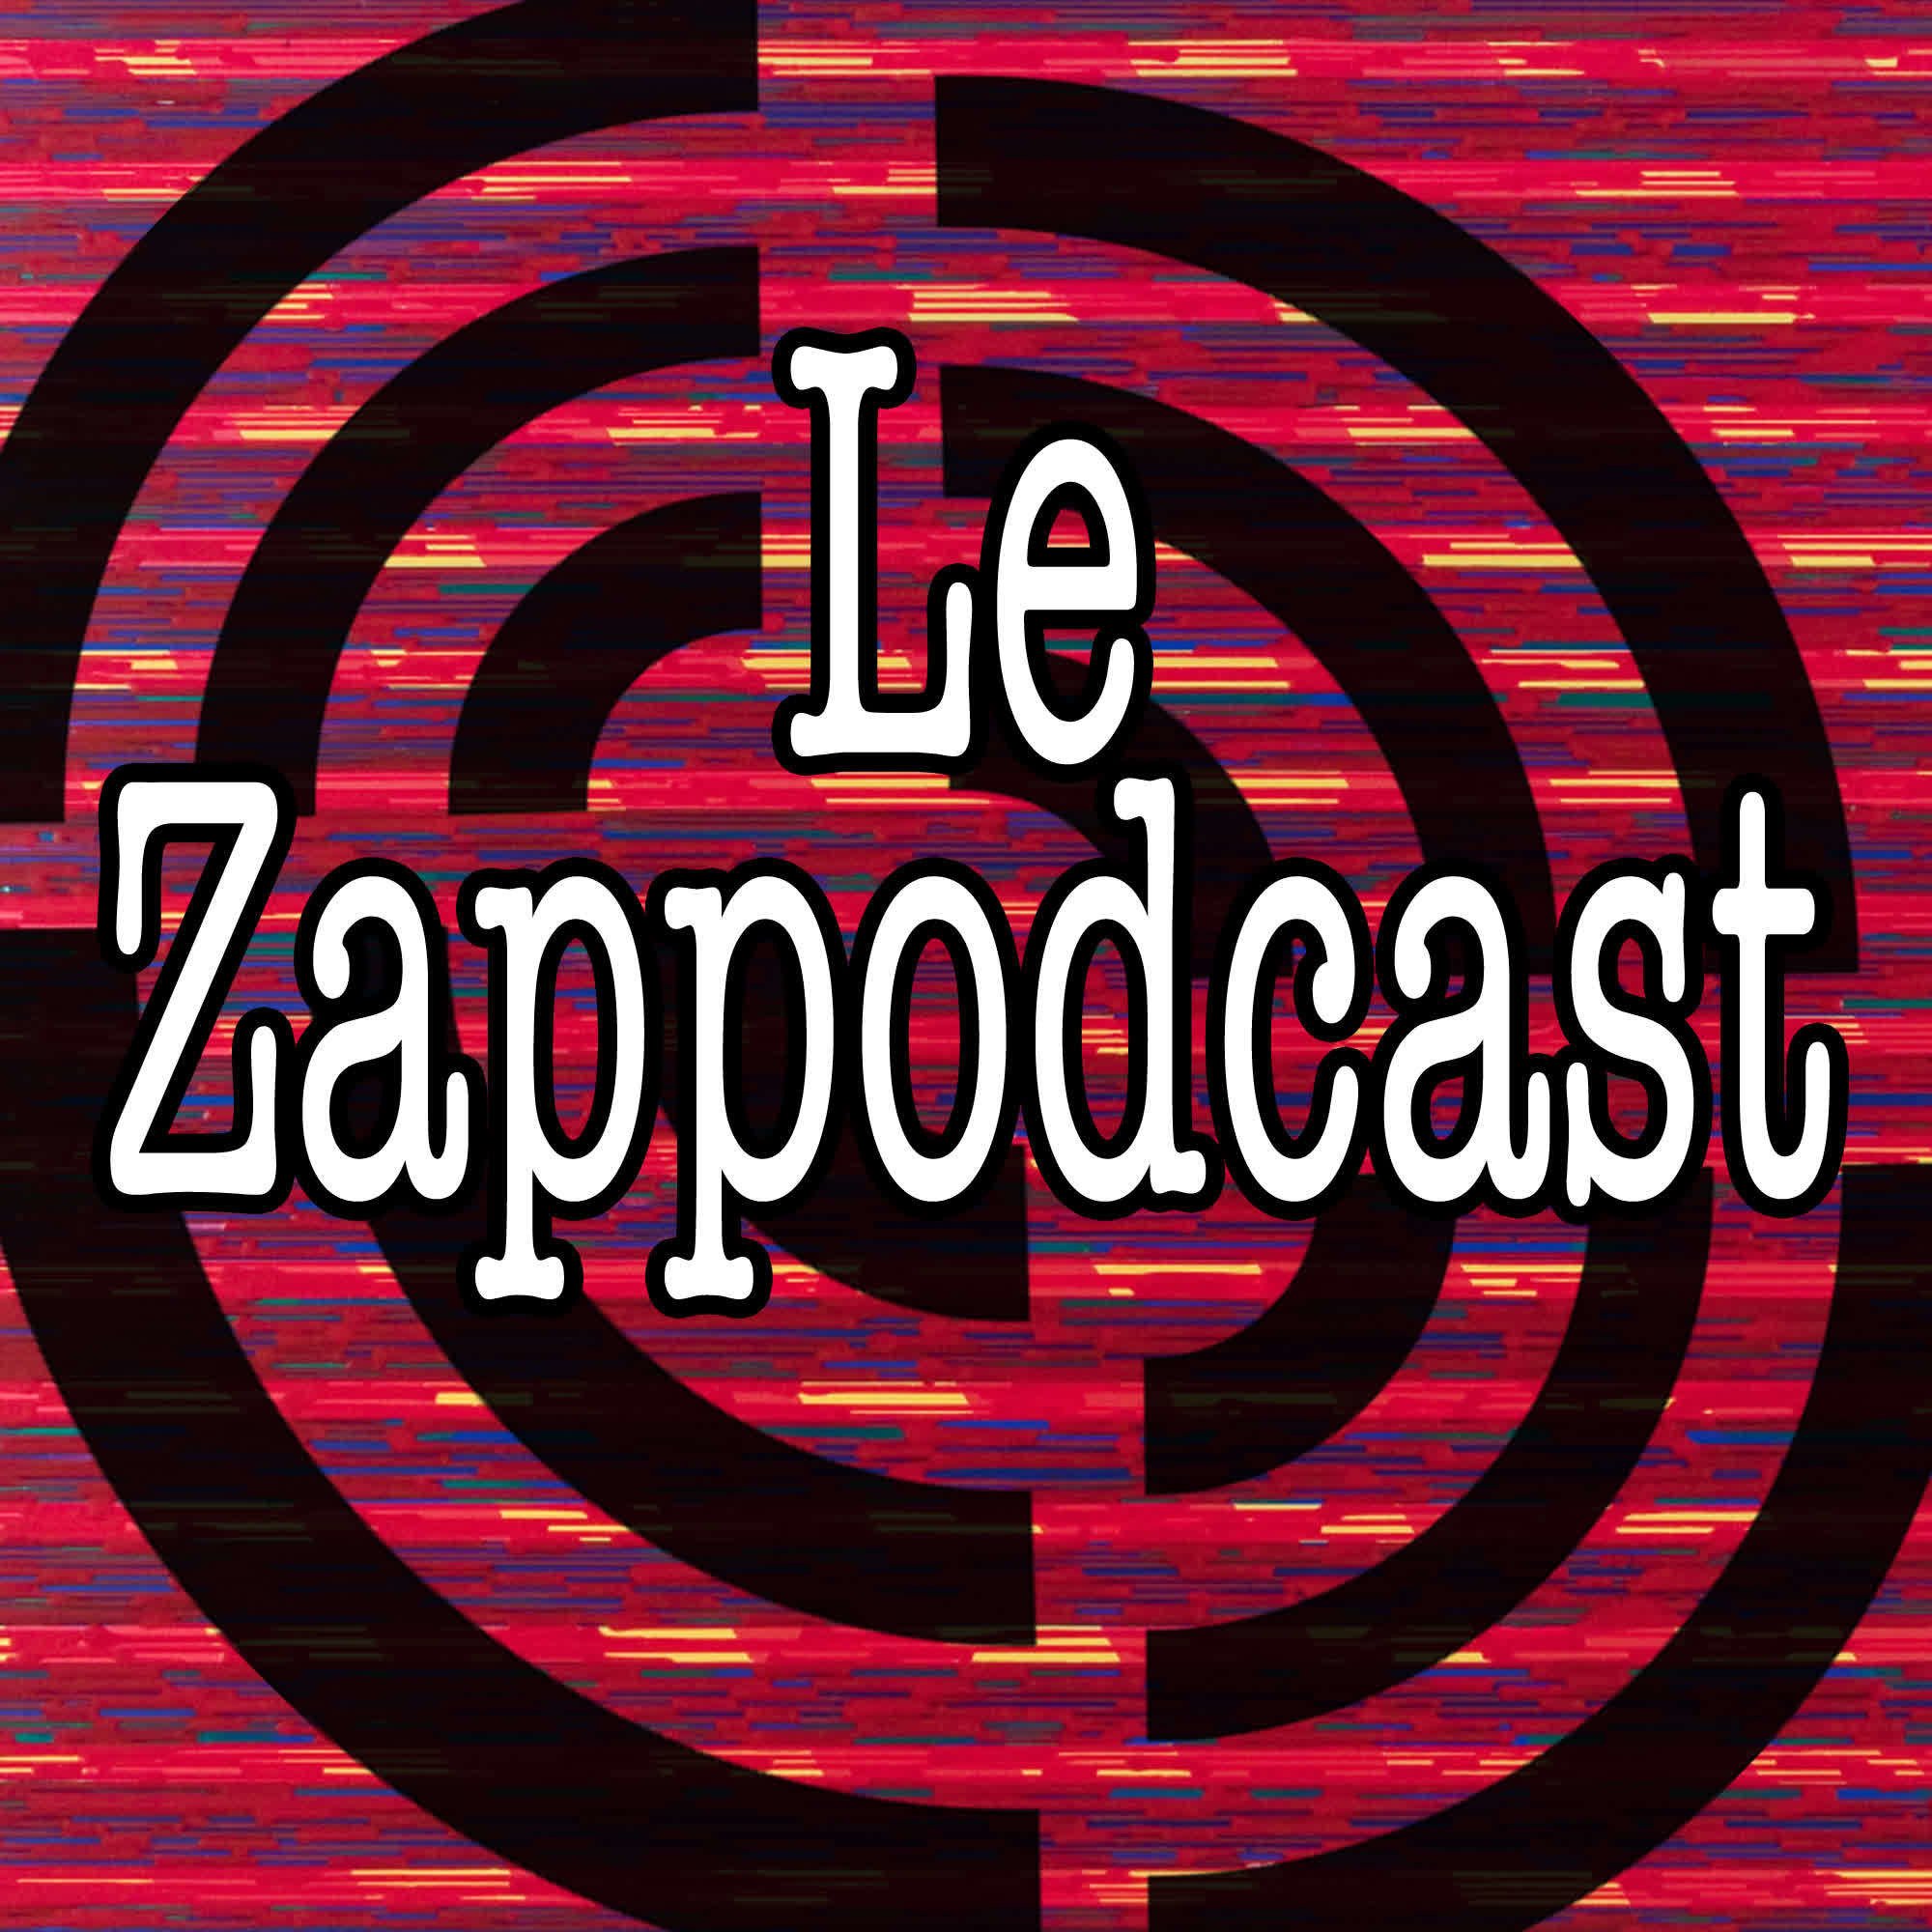 zappodcast #73